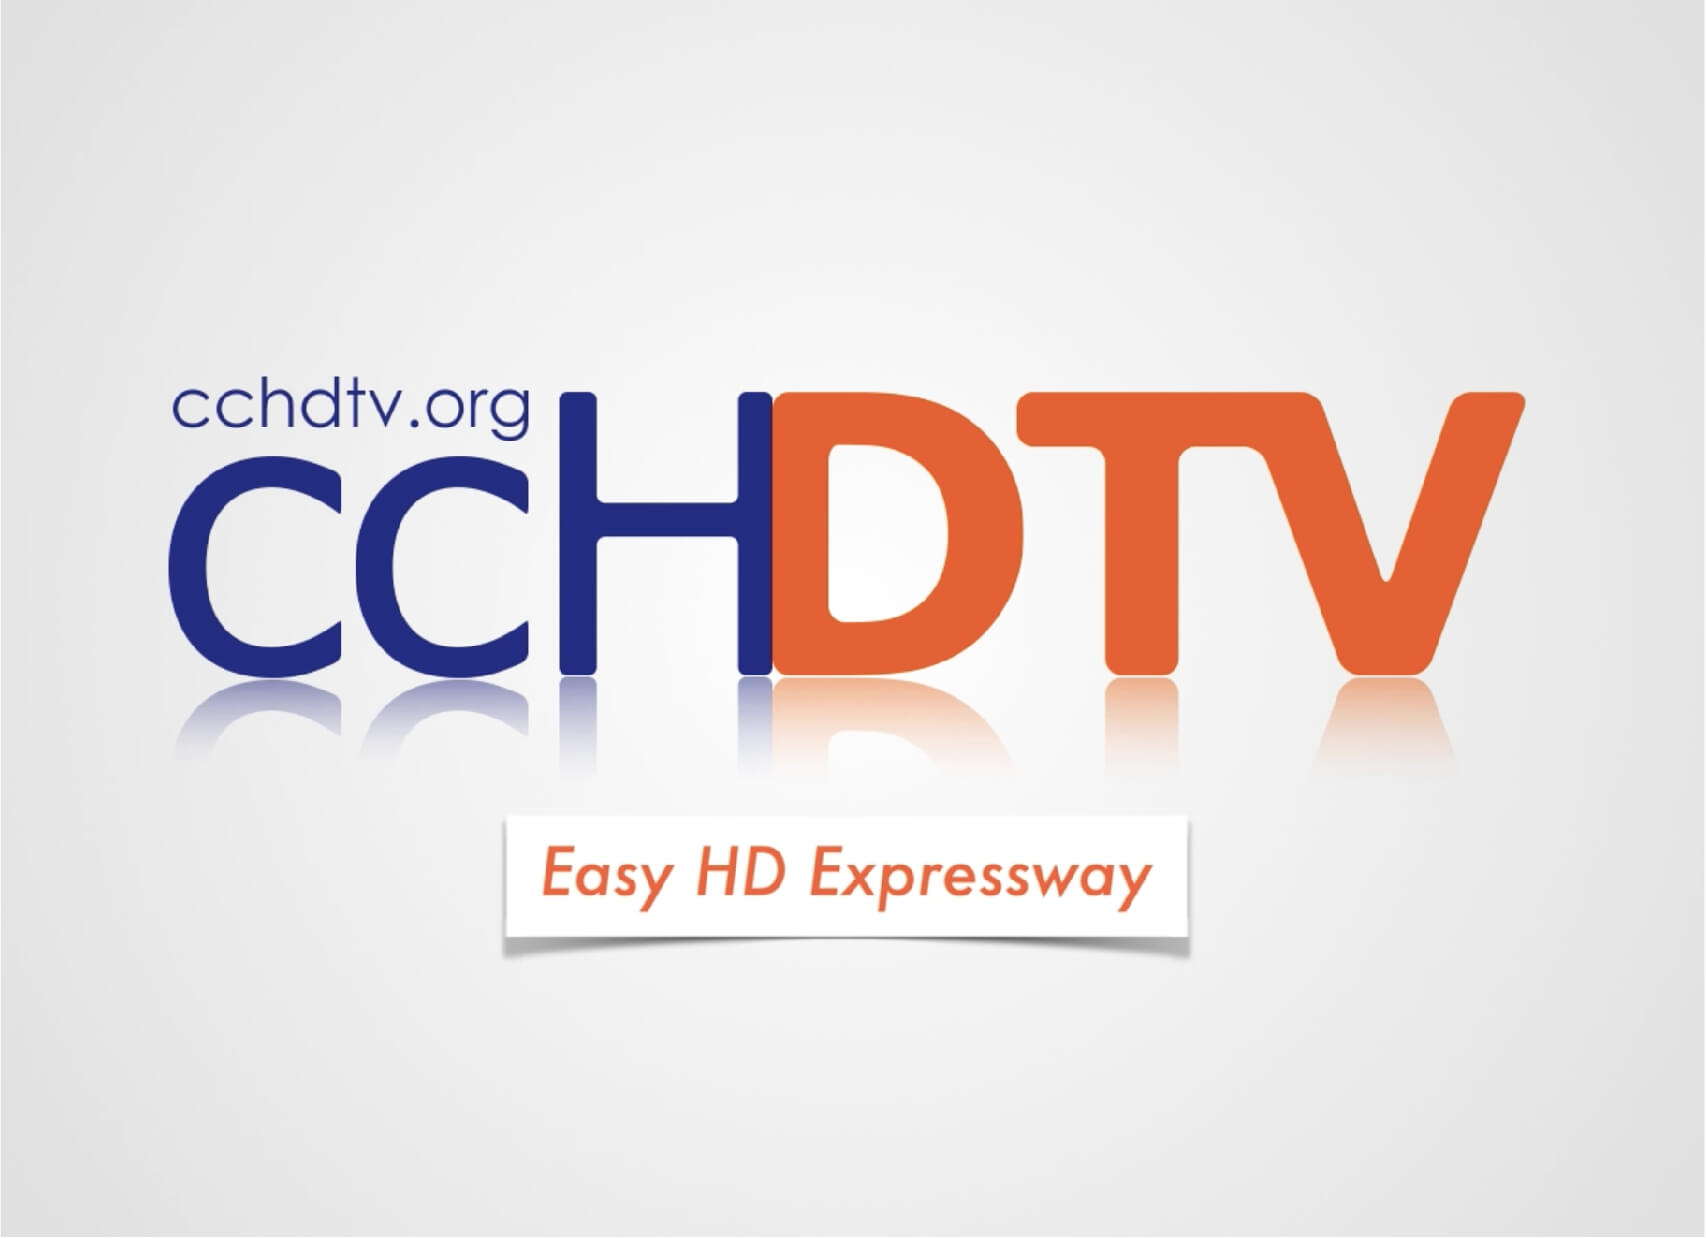 ccHDTV